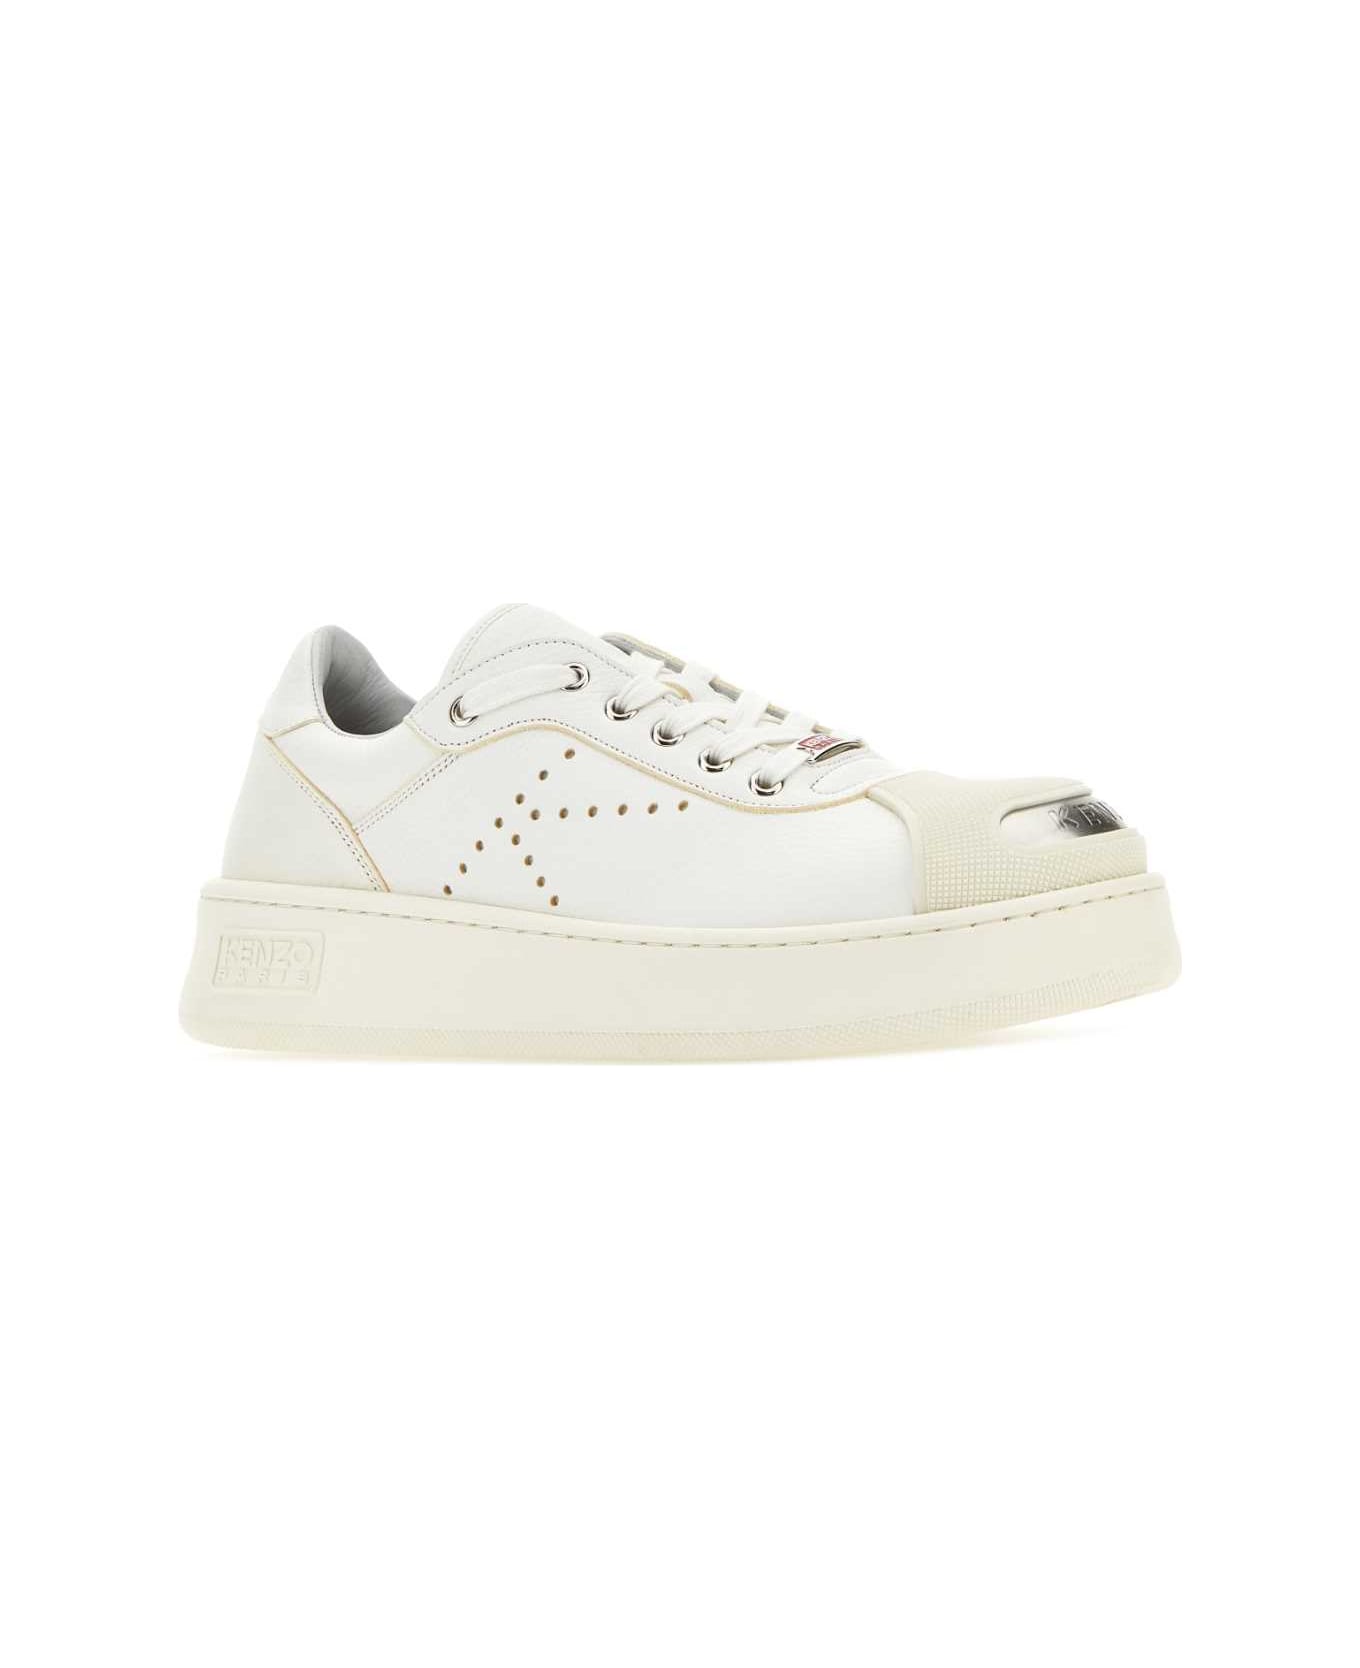 Kenzo White Leather Kenzo Hoops Sneakers - 01